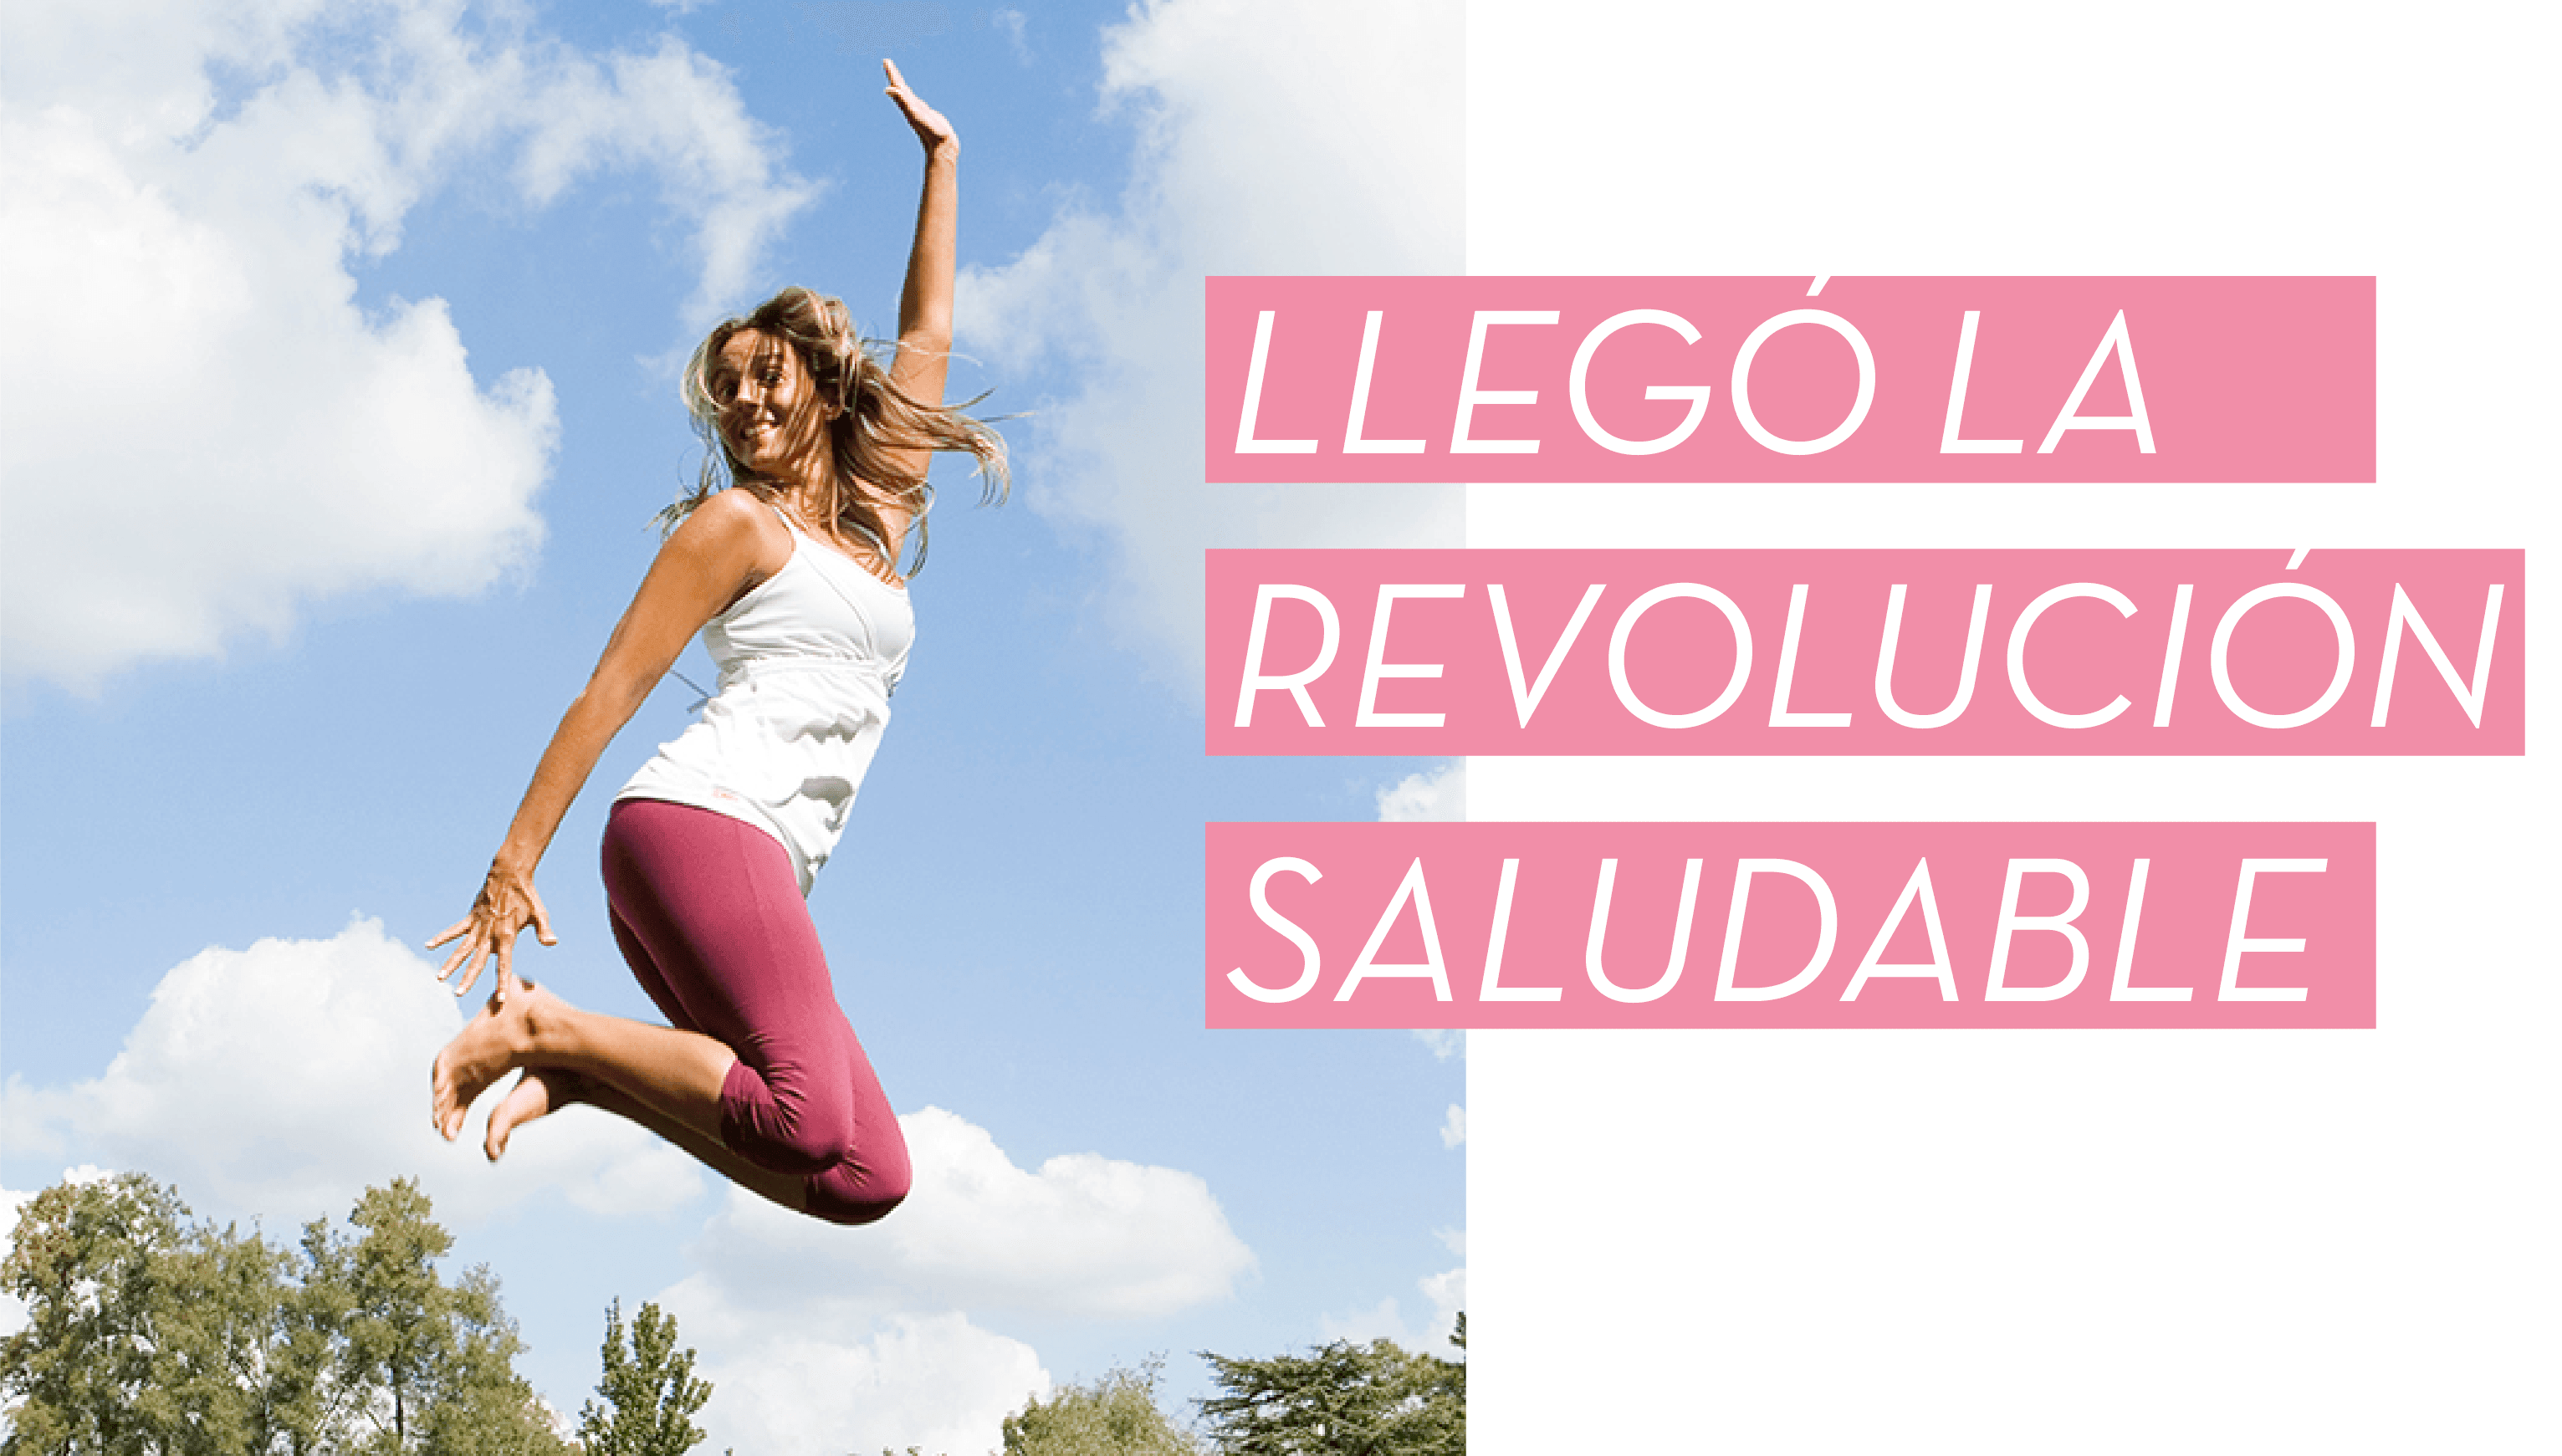 Se vino la revolución saludable!!! by Vero Segreto